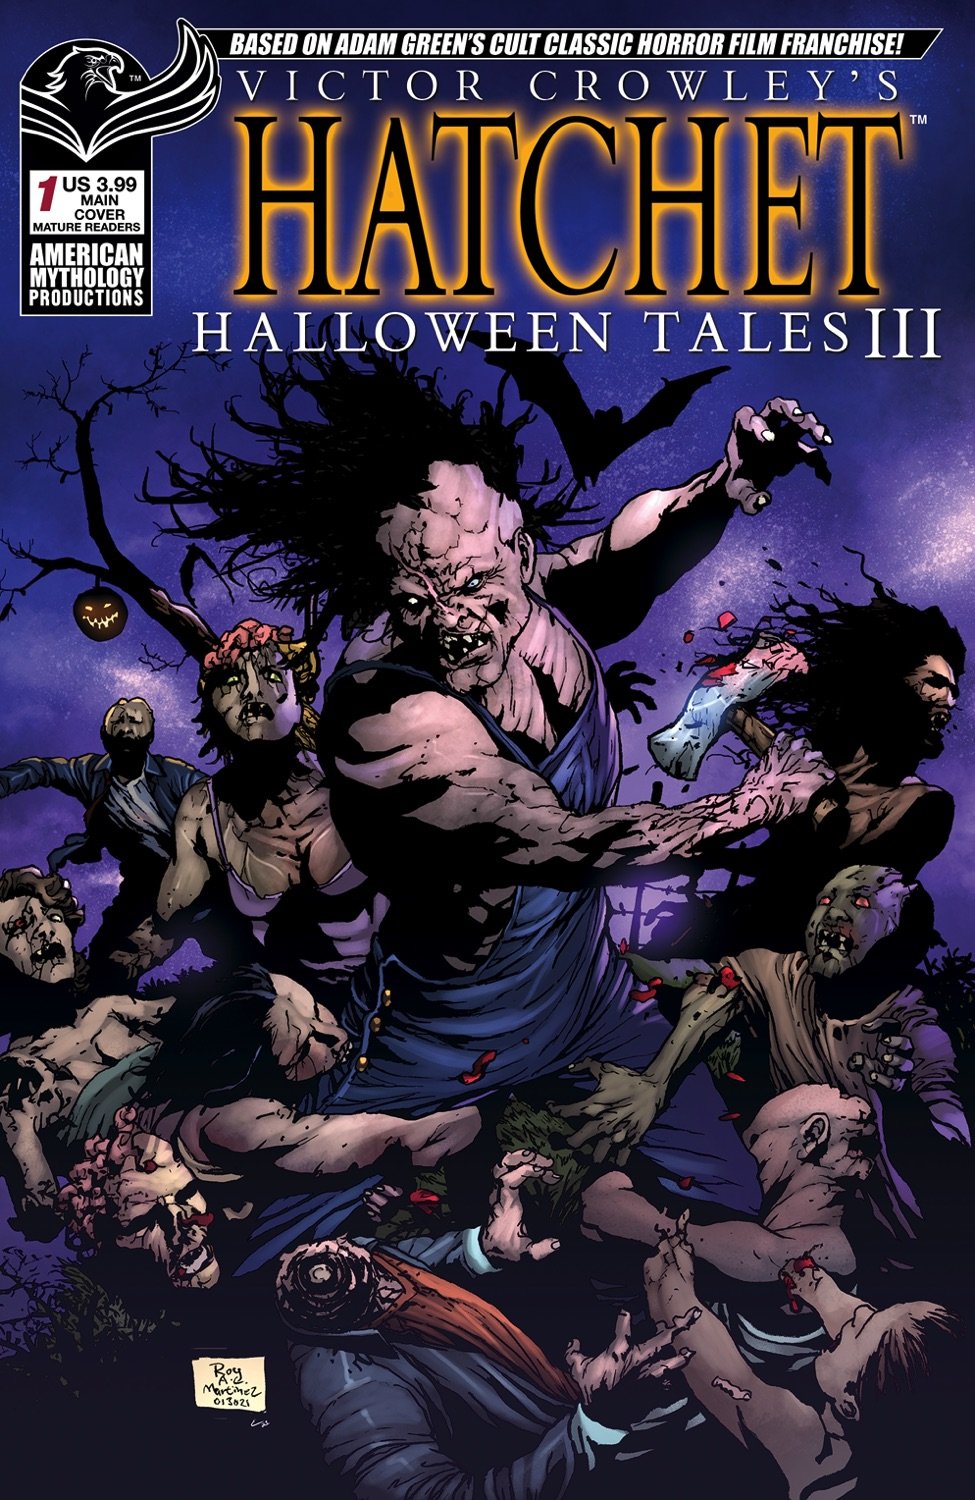 Victor Crowley Hatchet Halloween III #1